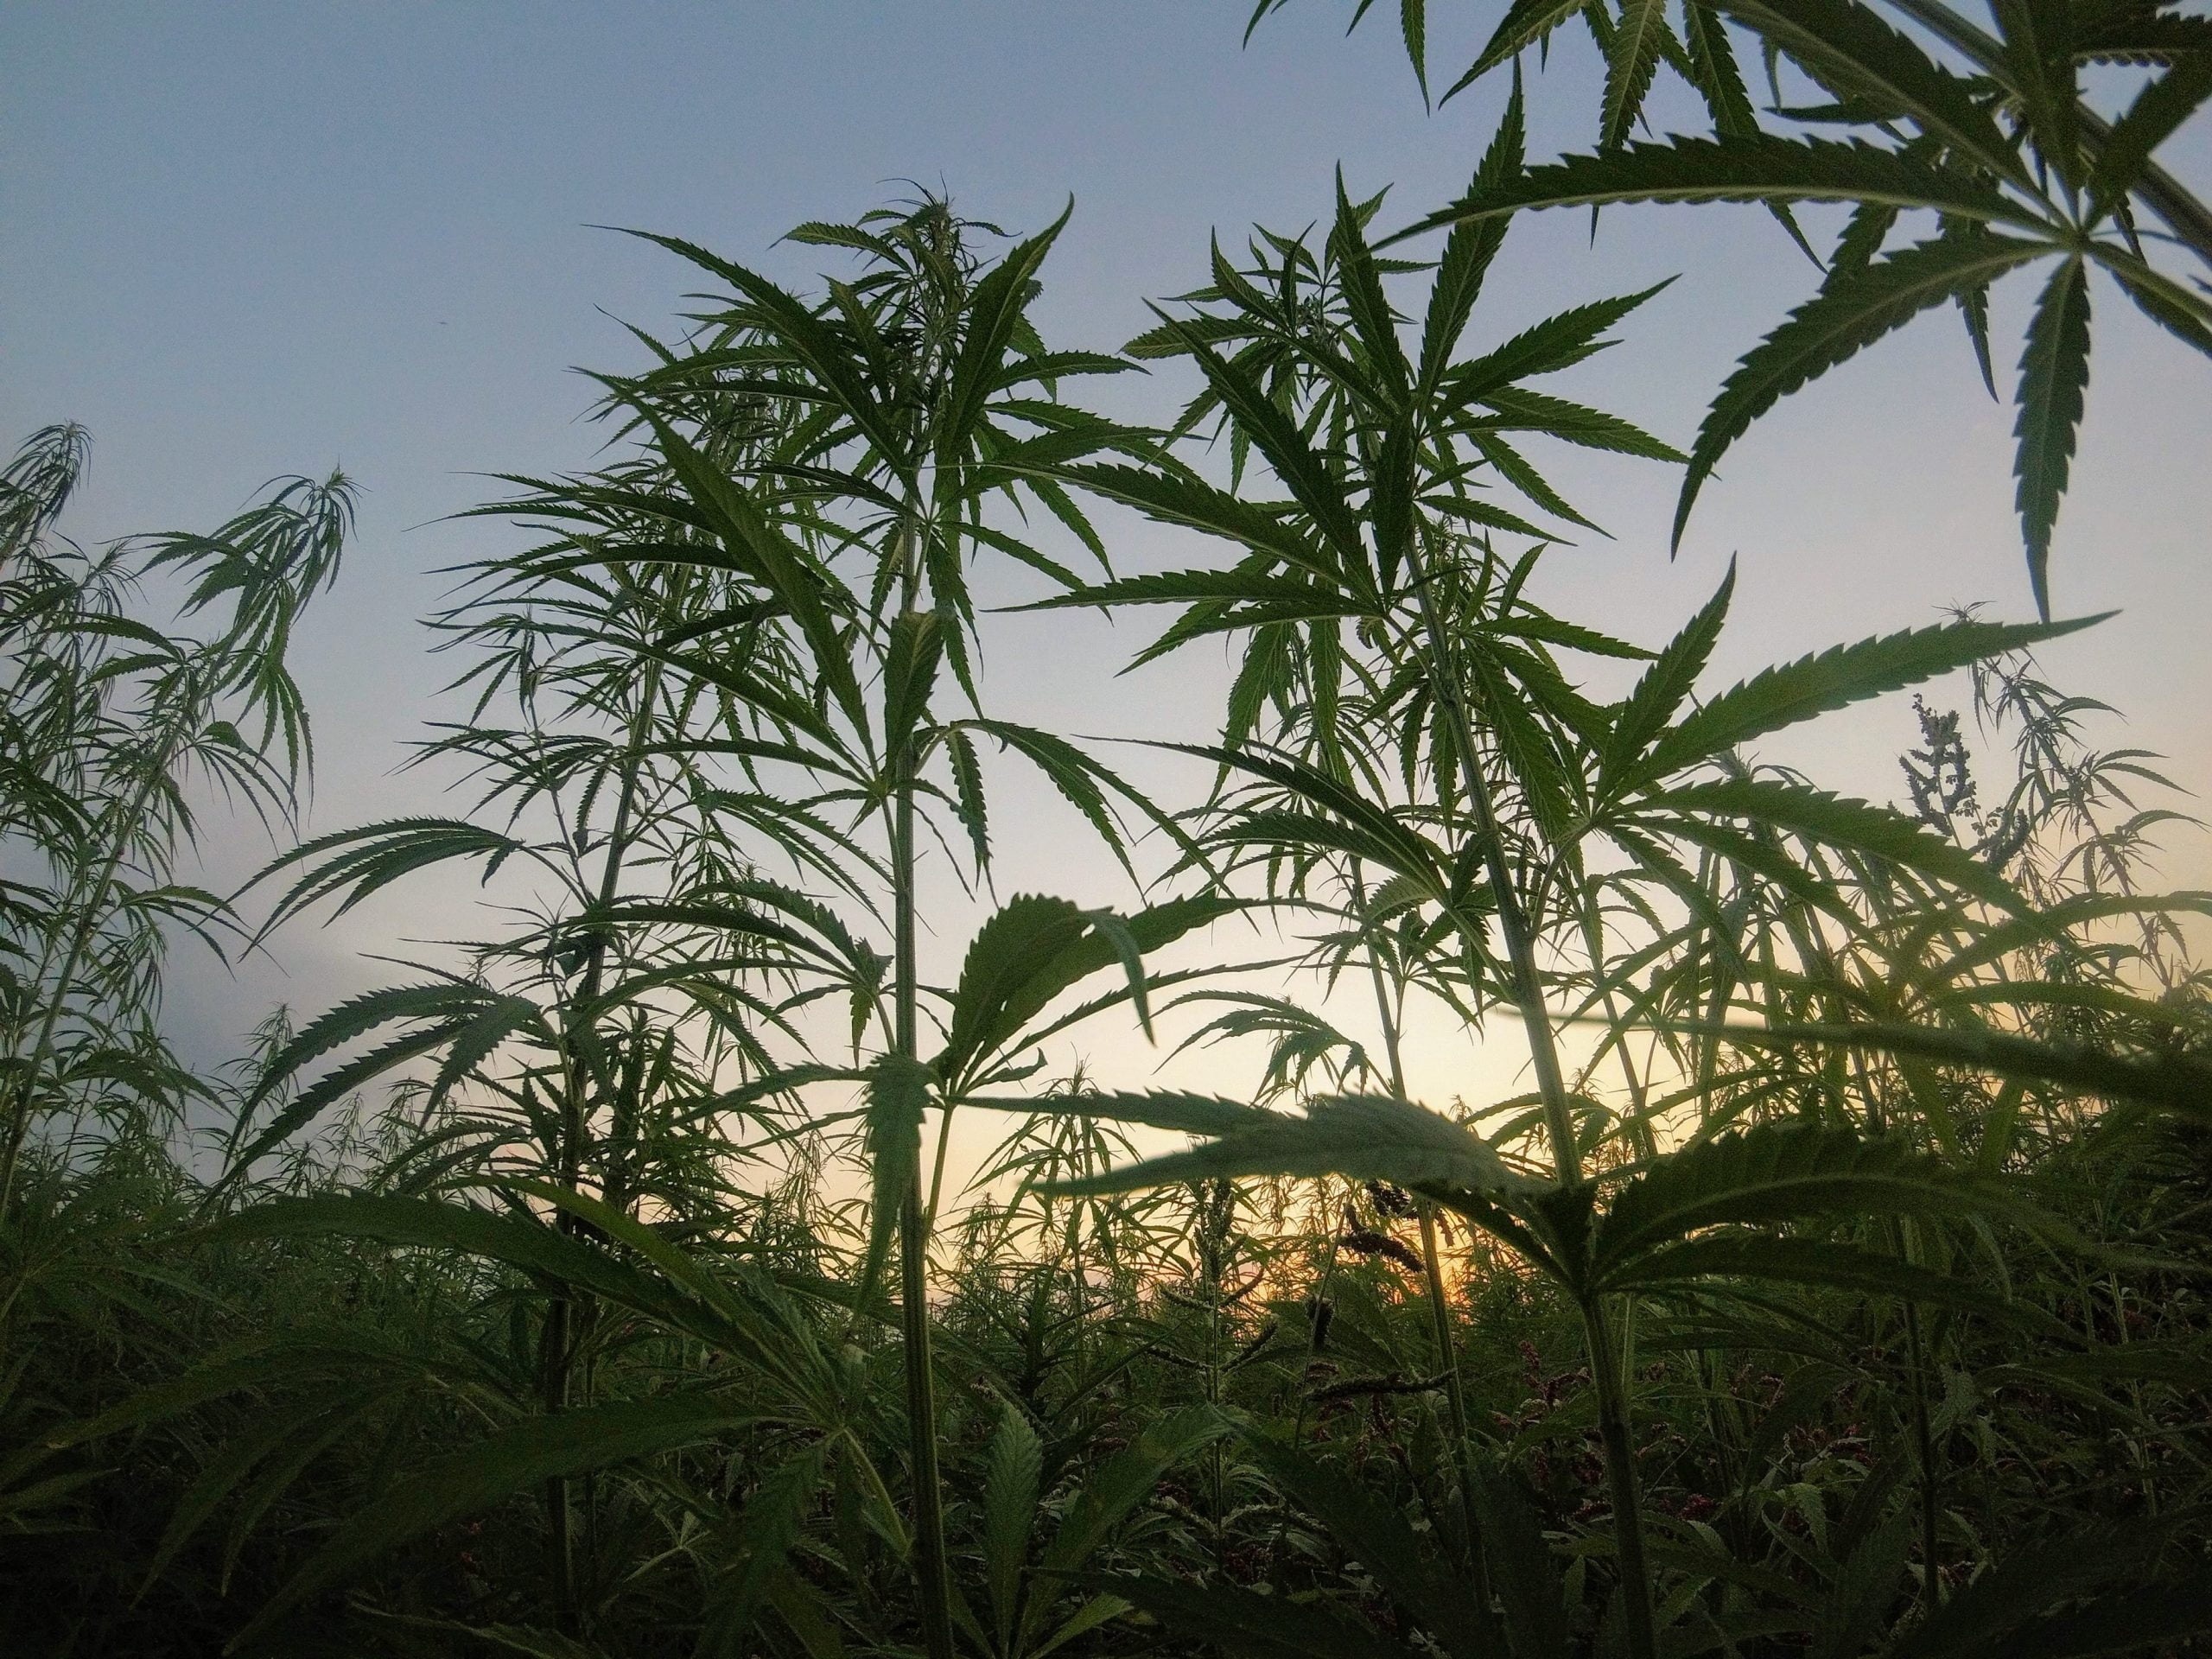 Food Security vs Legalising Cannabis